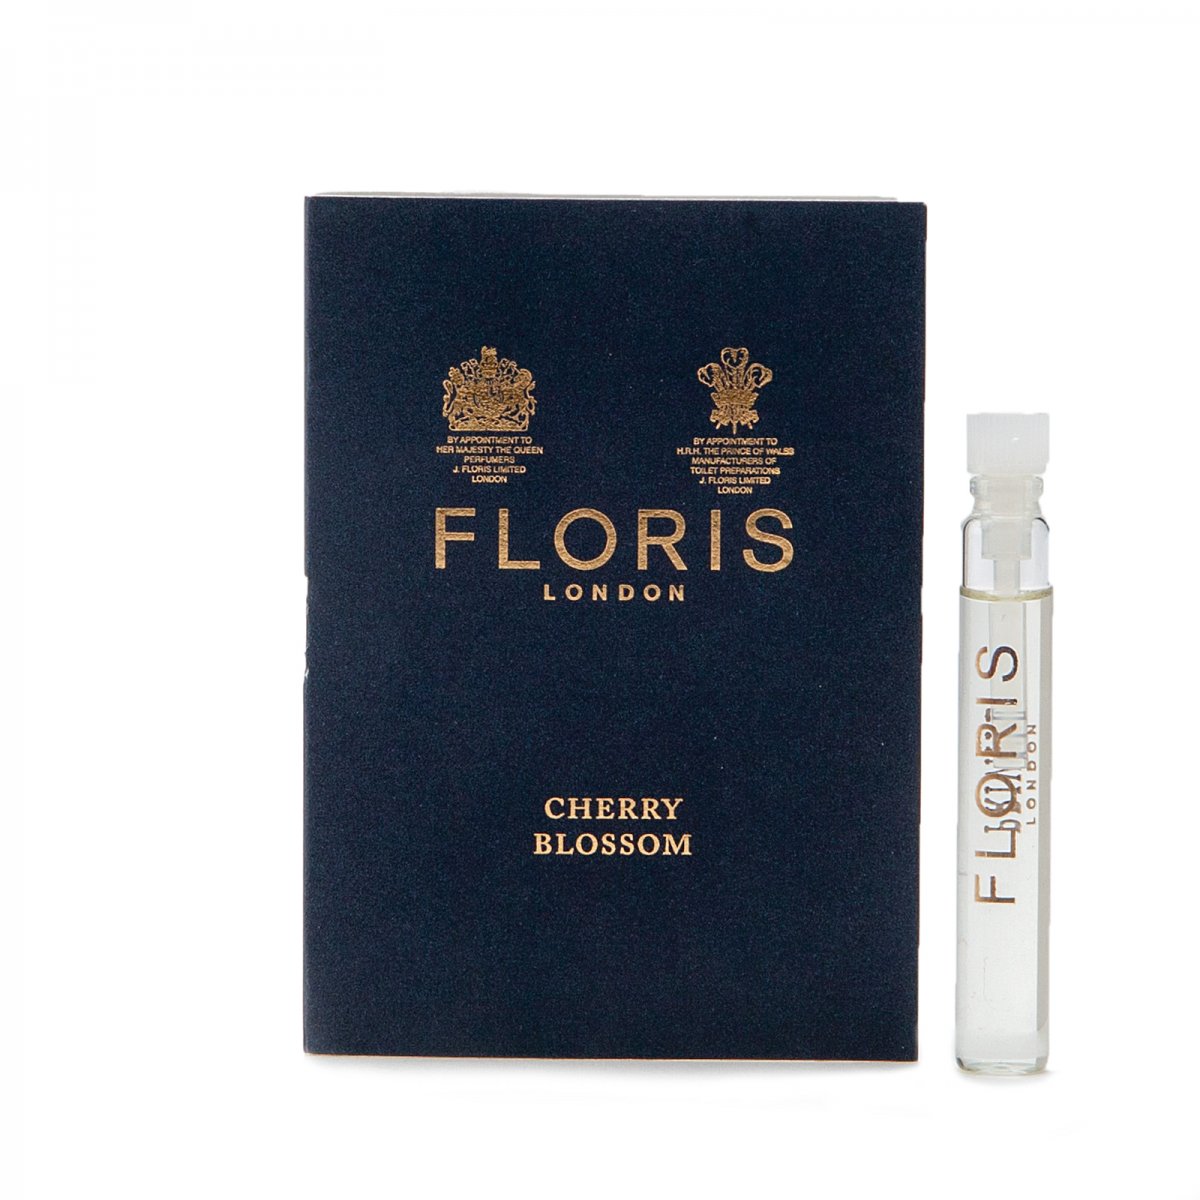 Floris Cherry Blossom EdP Parfümproben (2 ml) von Floris